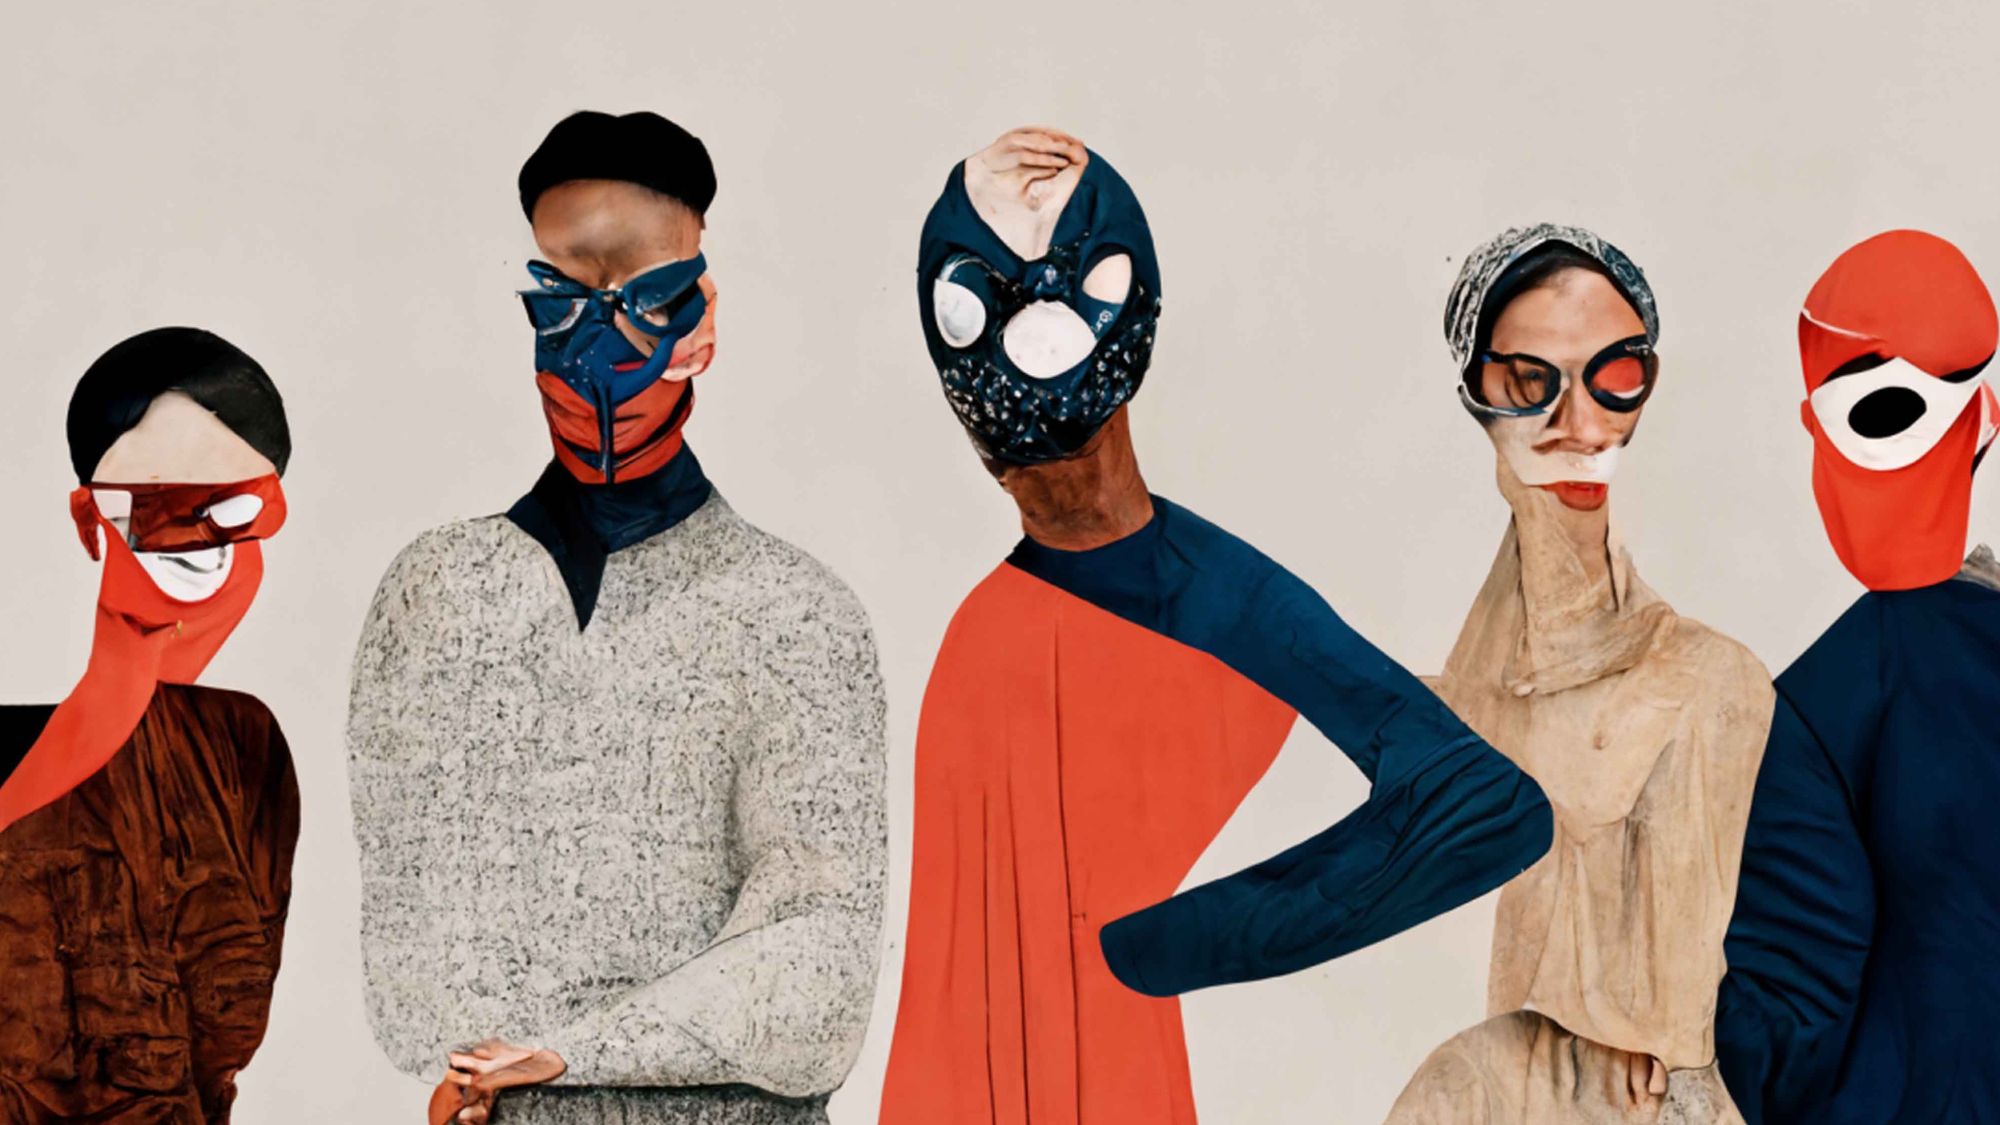 An Image of designers dressed as superheroes